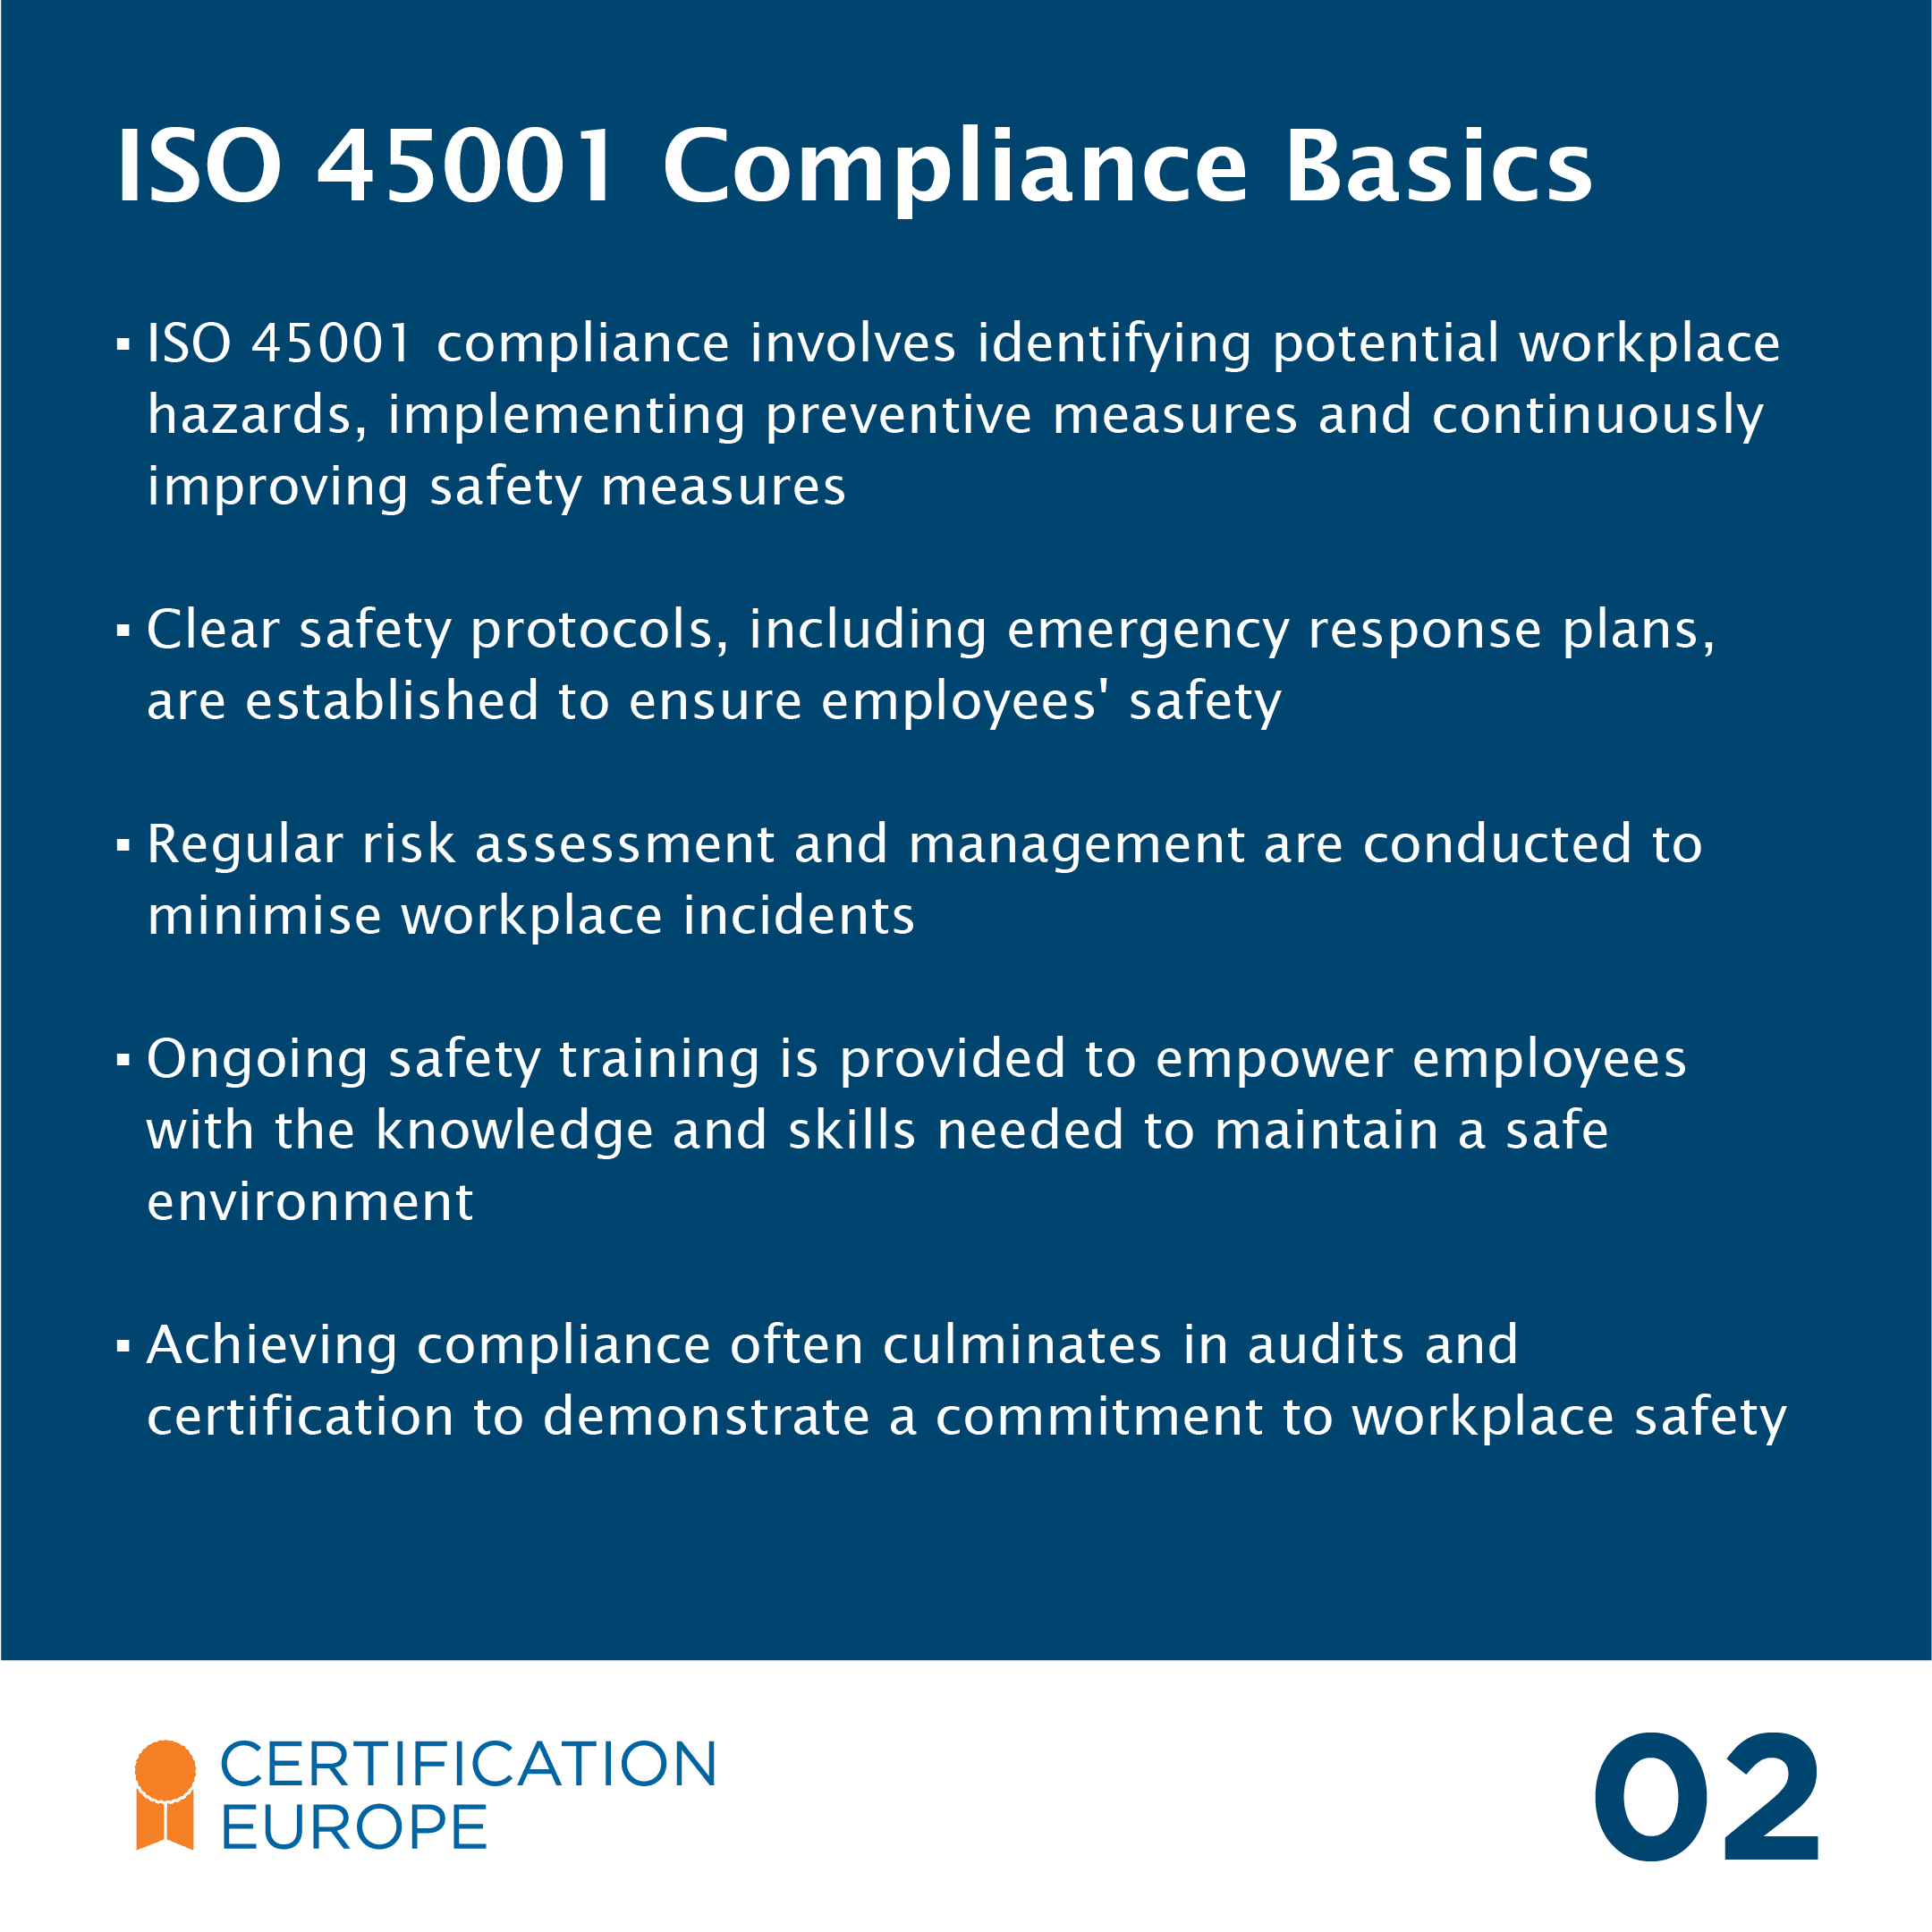 ISO 45001 Compliance basics